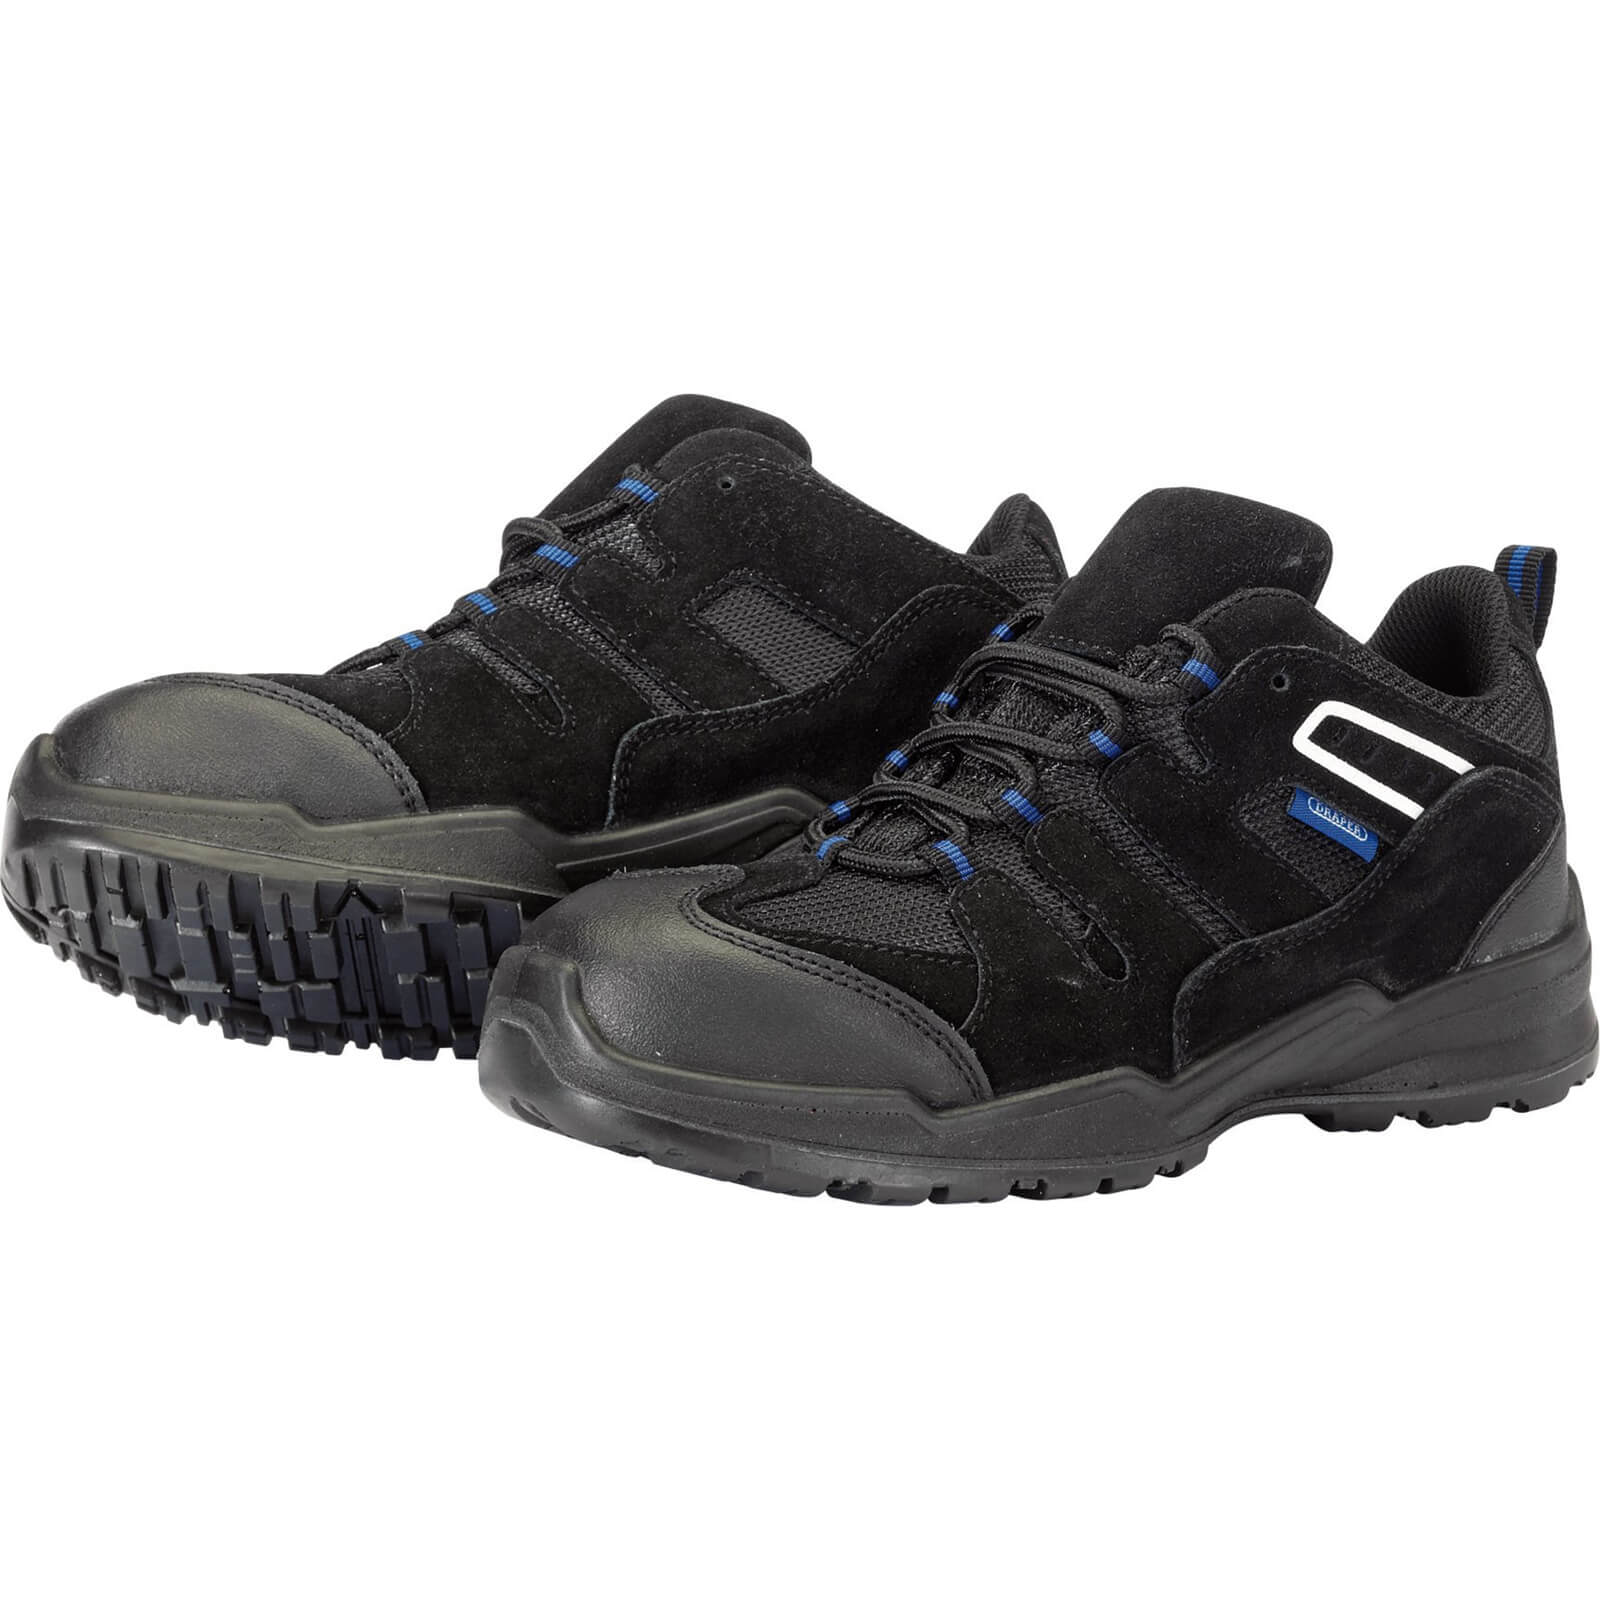 Image of Draper Trainer Style Safety Shoe Black Size 4